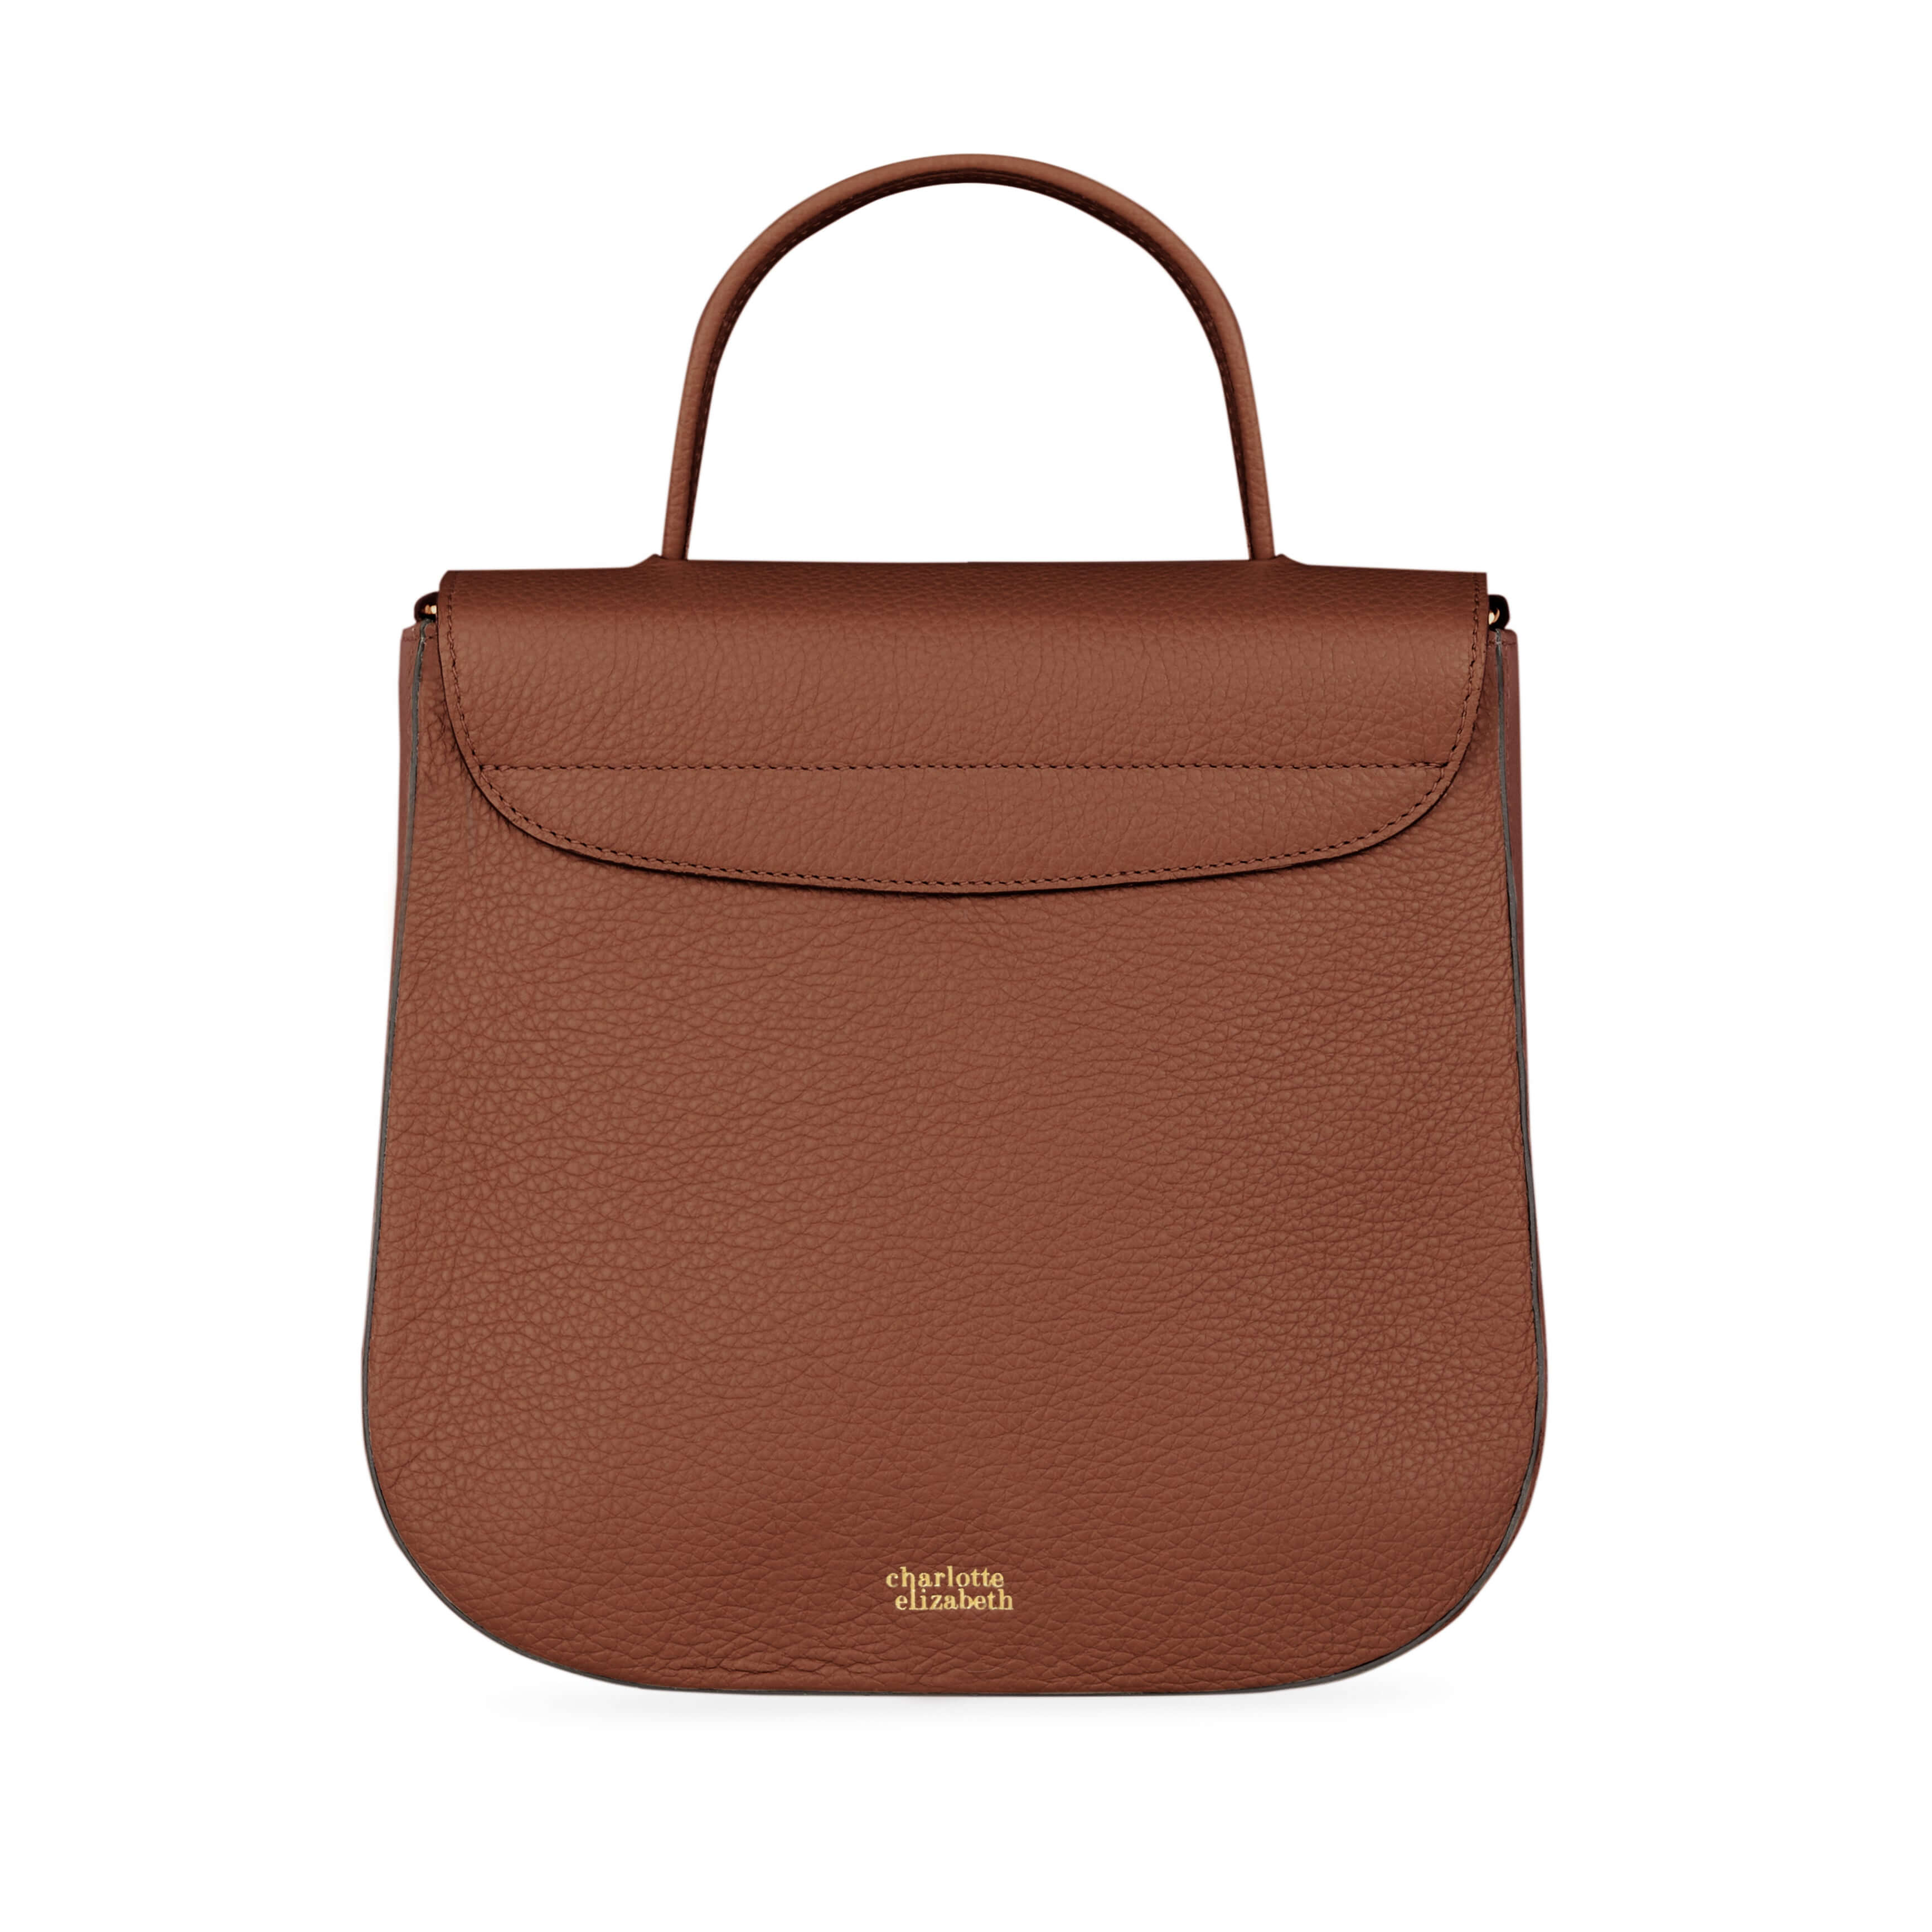 Bloomsbury Handbag Tan Leather Pebble Grain Purse